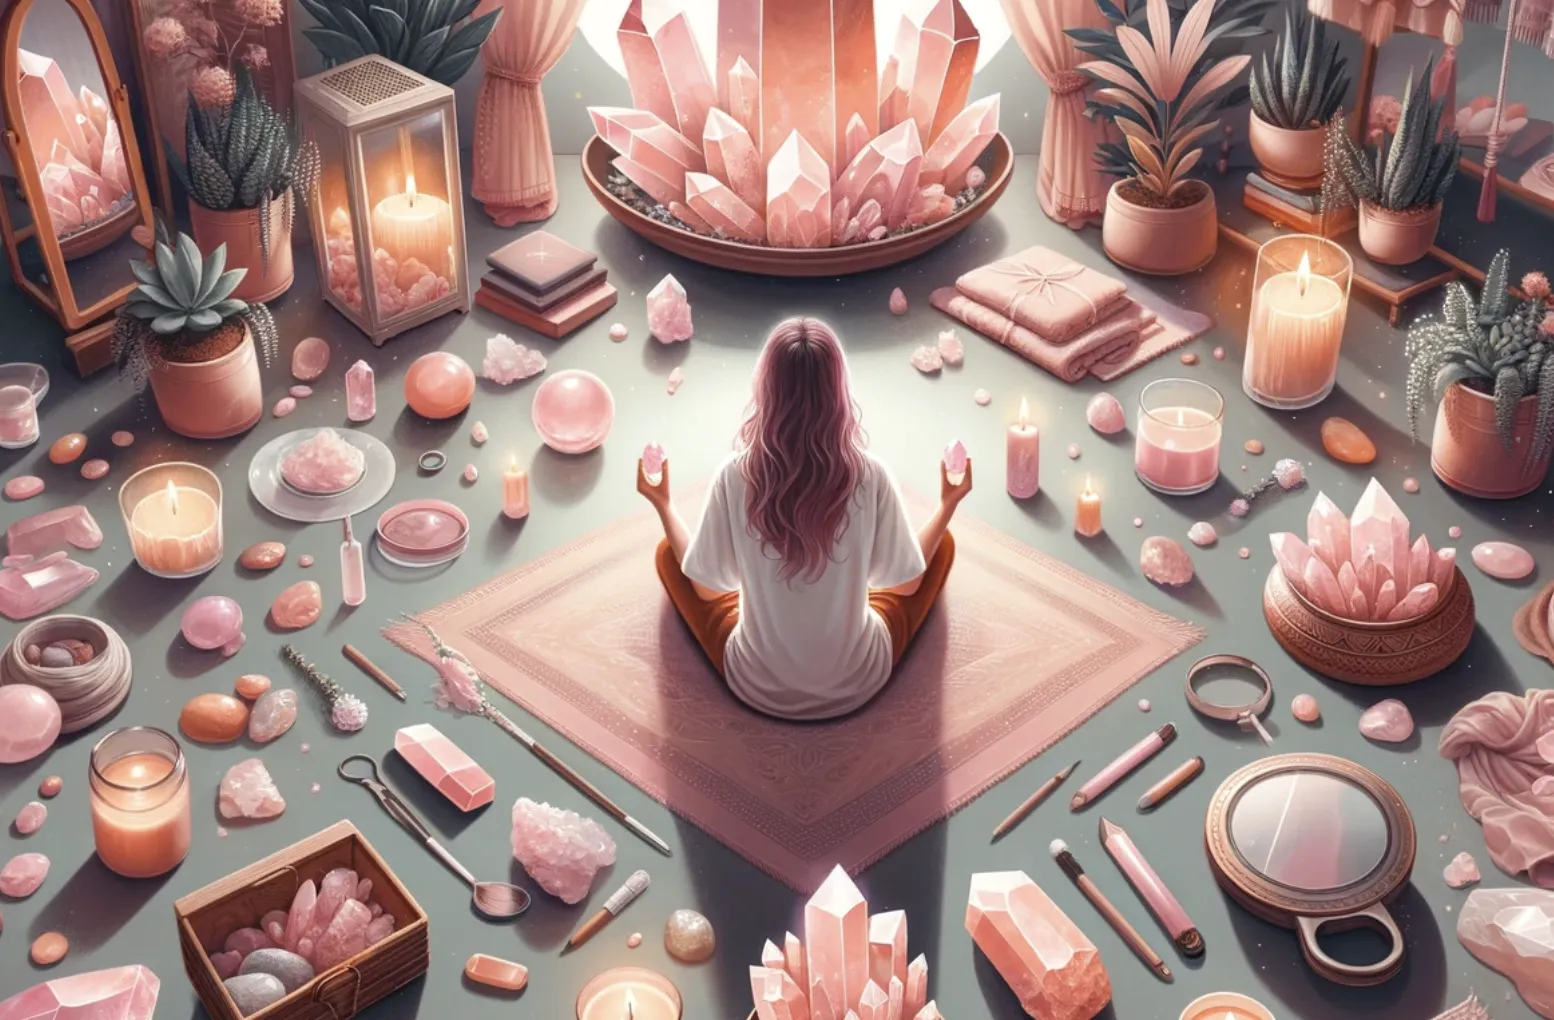 yoga nad rose quartz in a room filled with rose quartz crystals